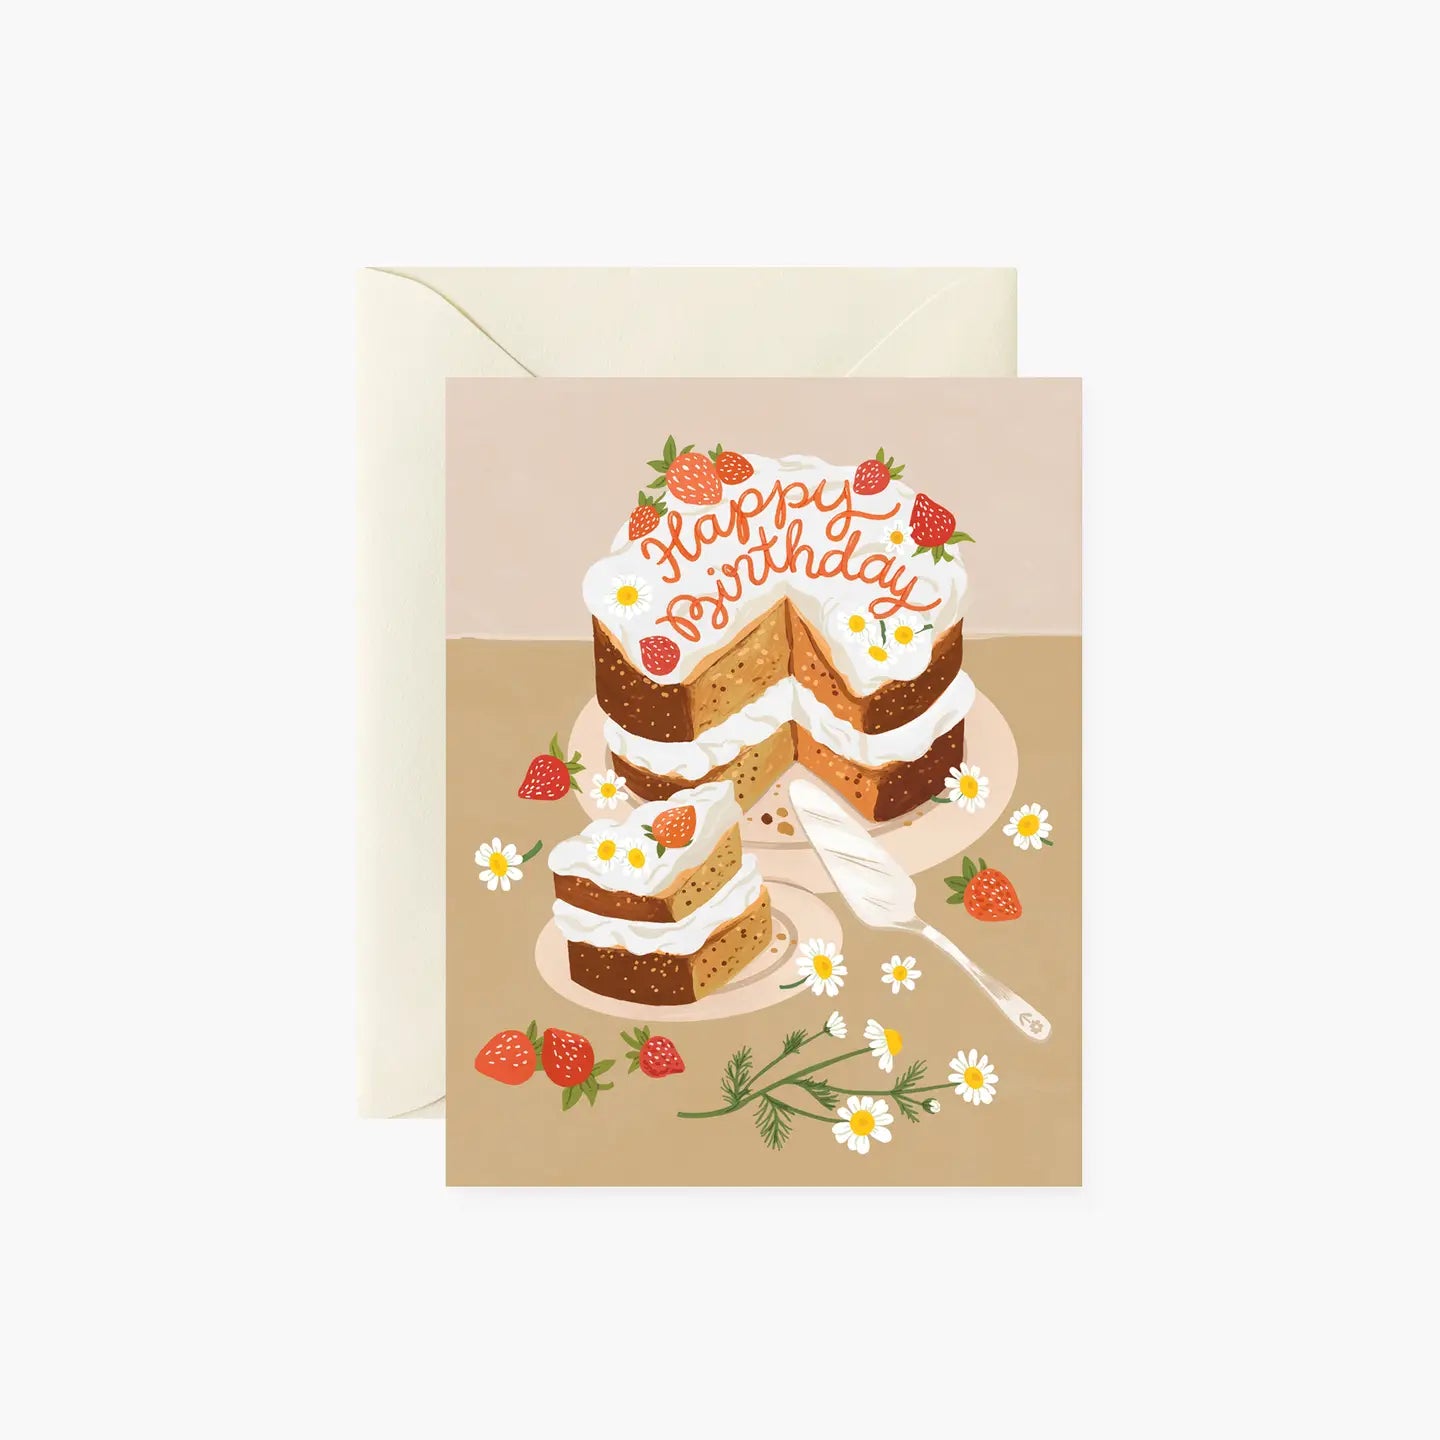 Botanica Paper Co. Greeting Card - Homemade Cake Birthday